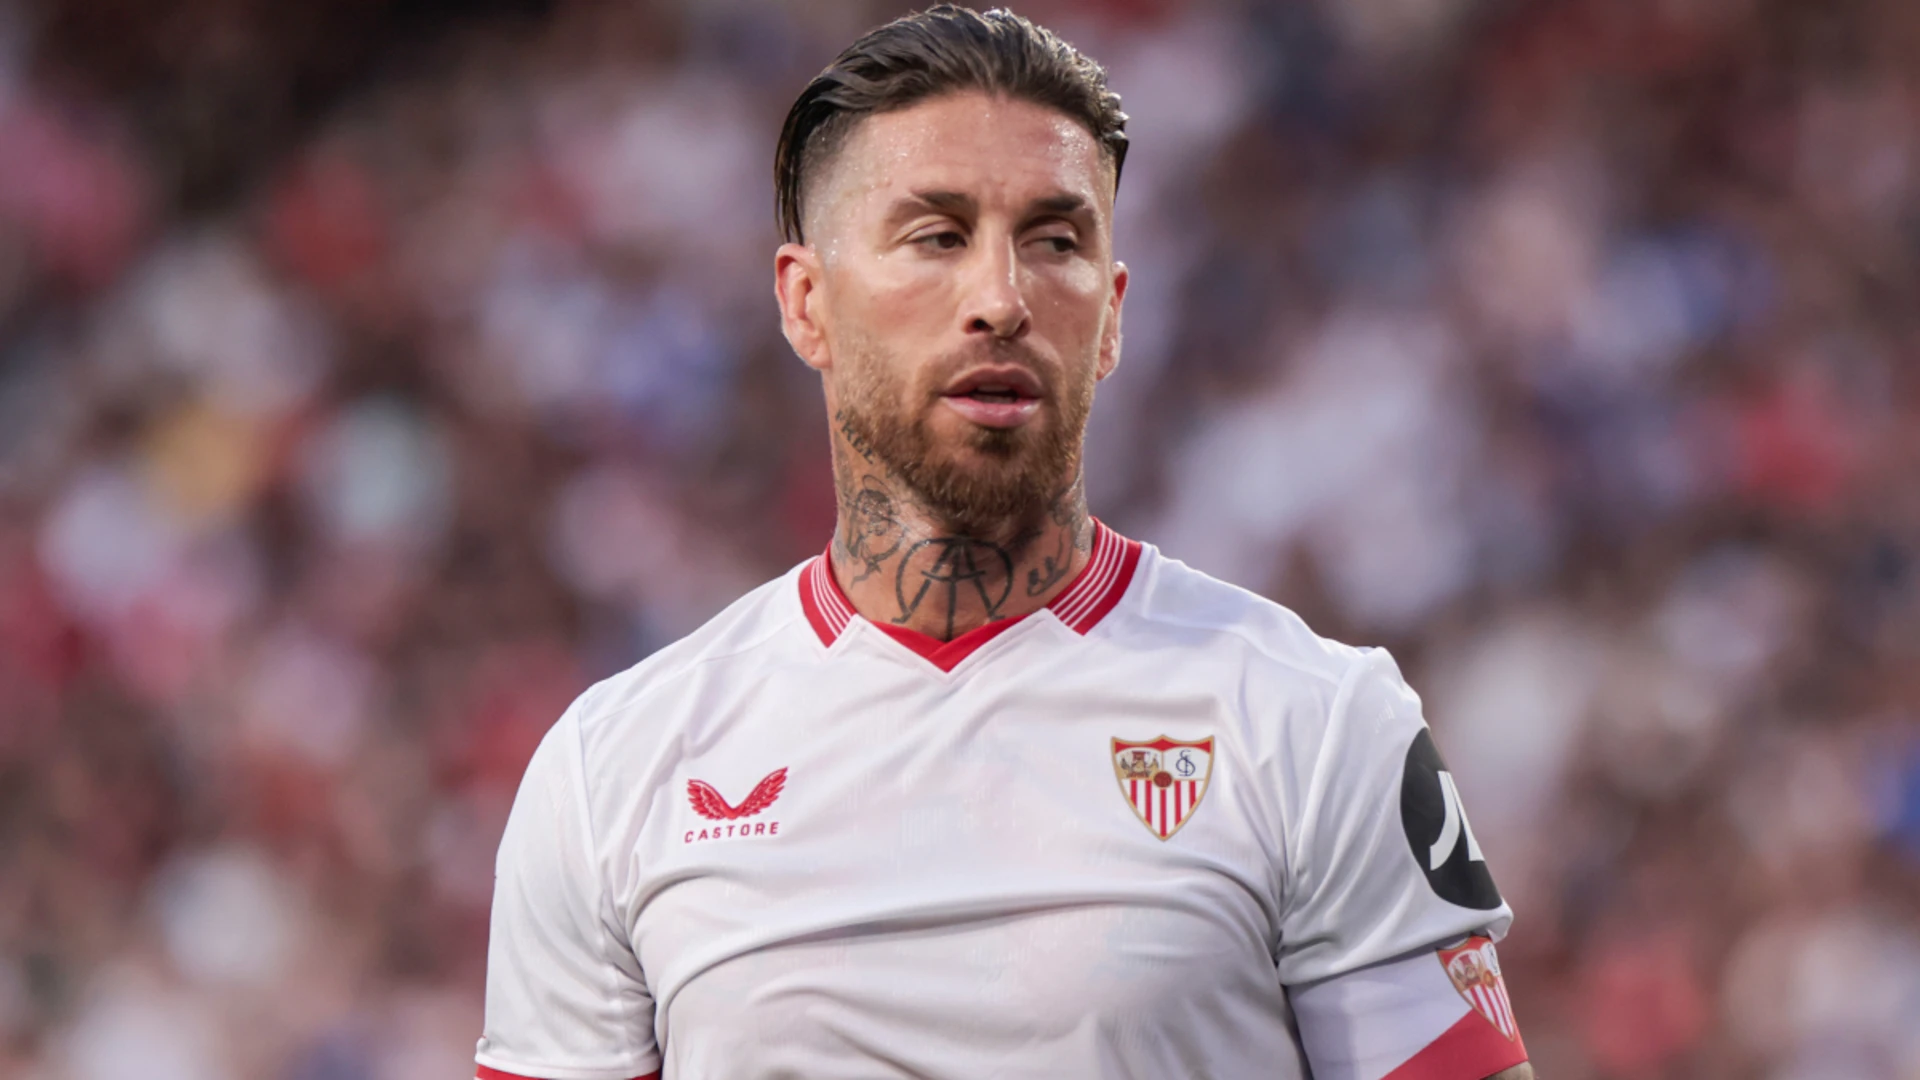 Spanish great Ramos quits Sevilla again